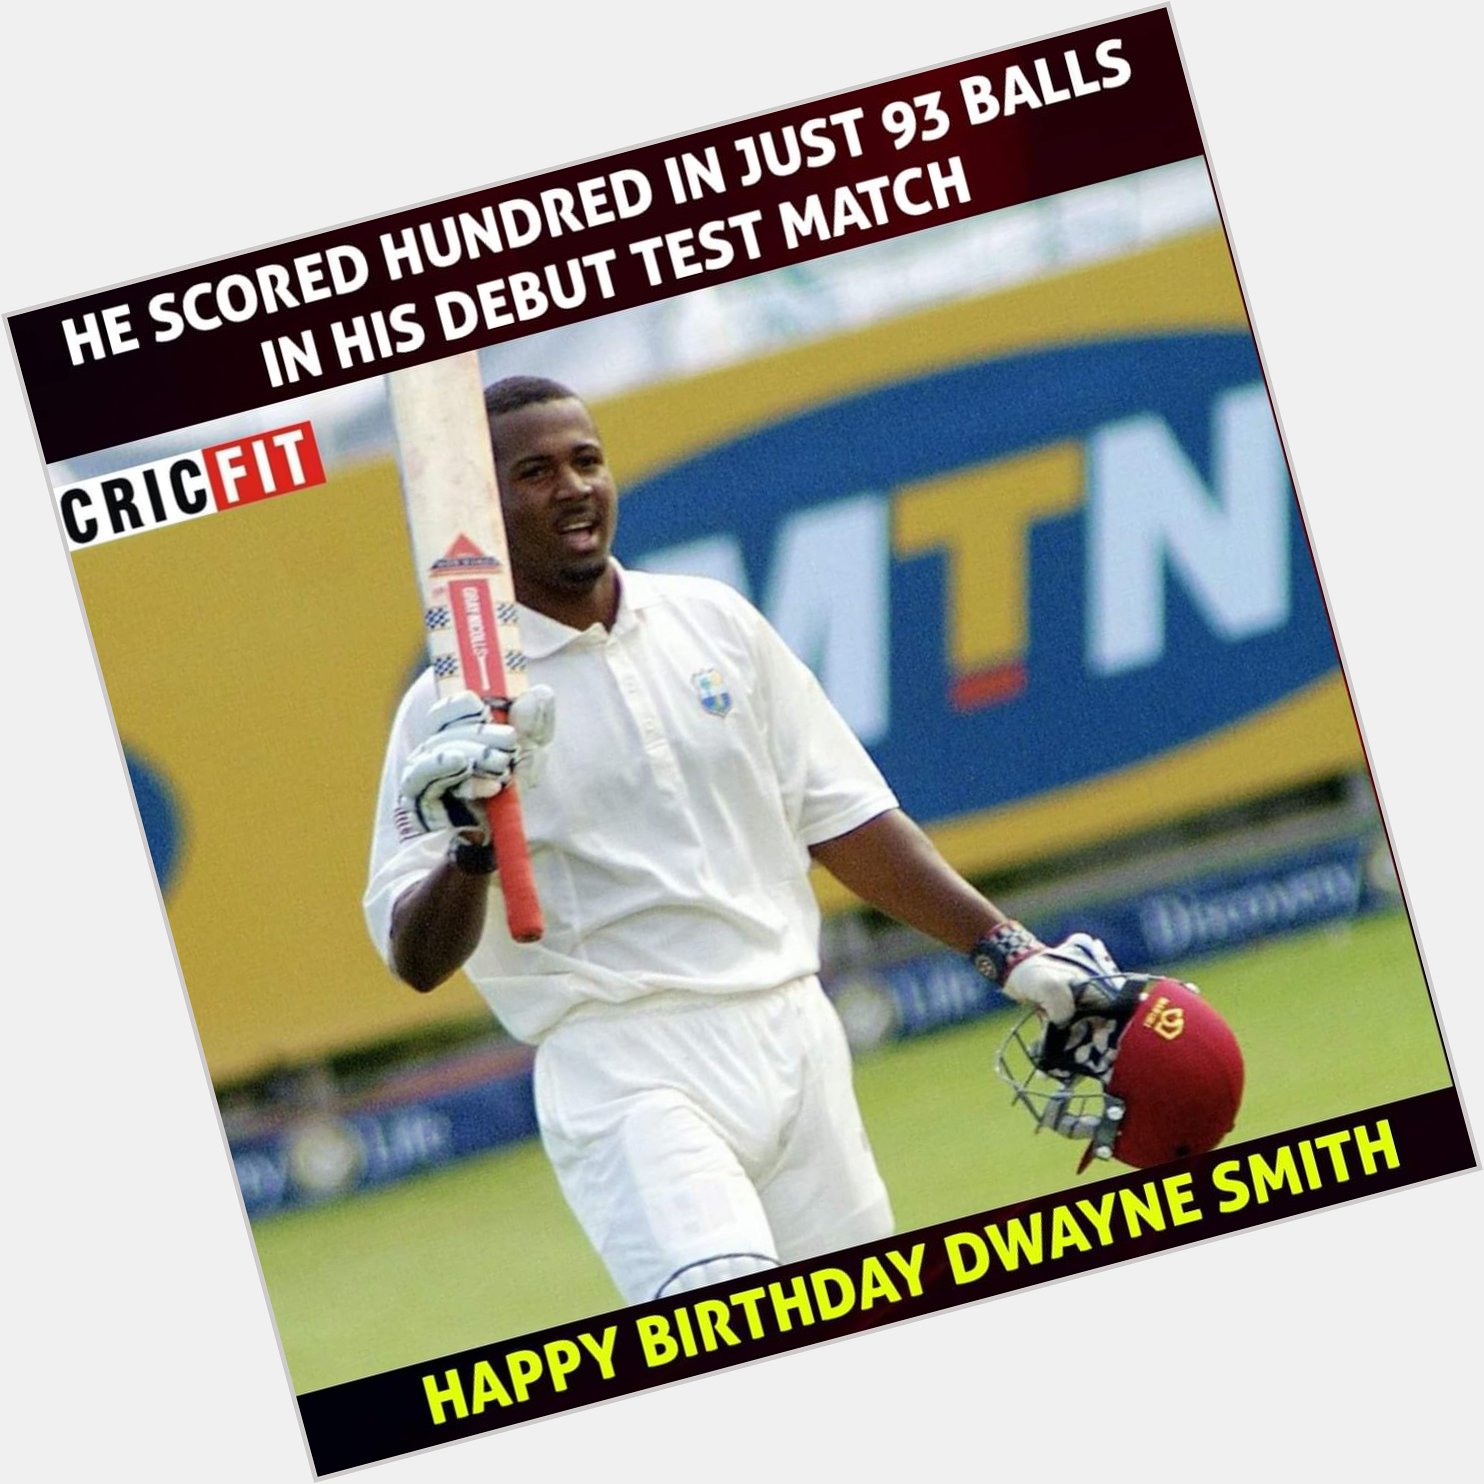 Happy Birthday Dwayne Smith
.
.          